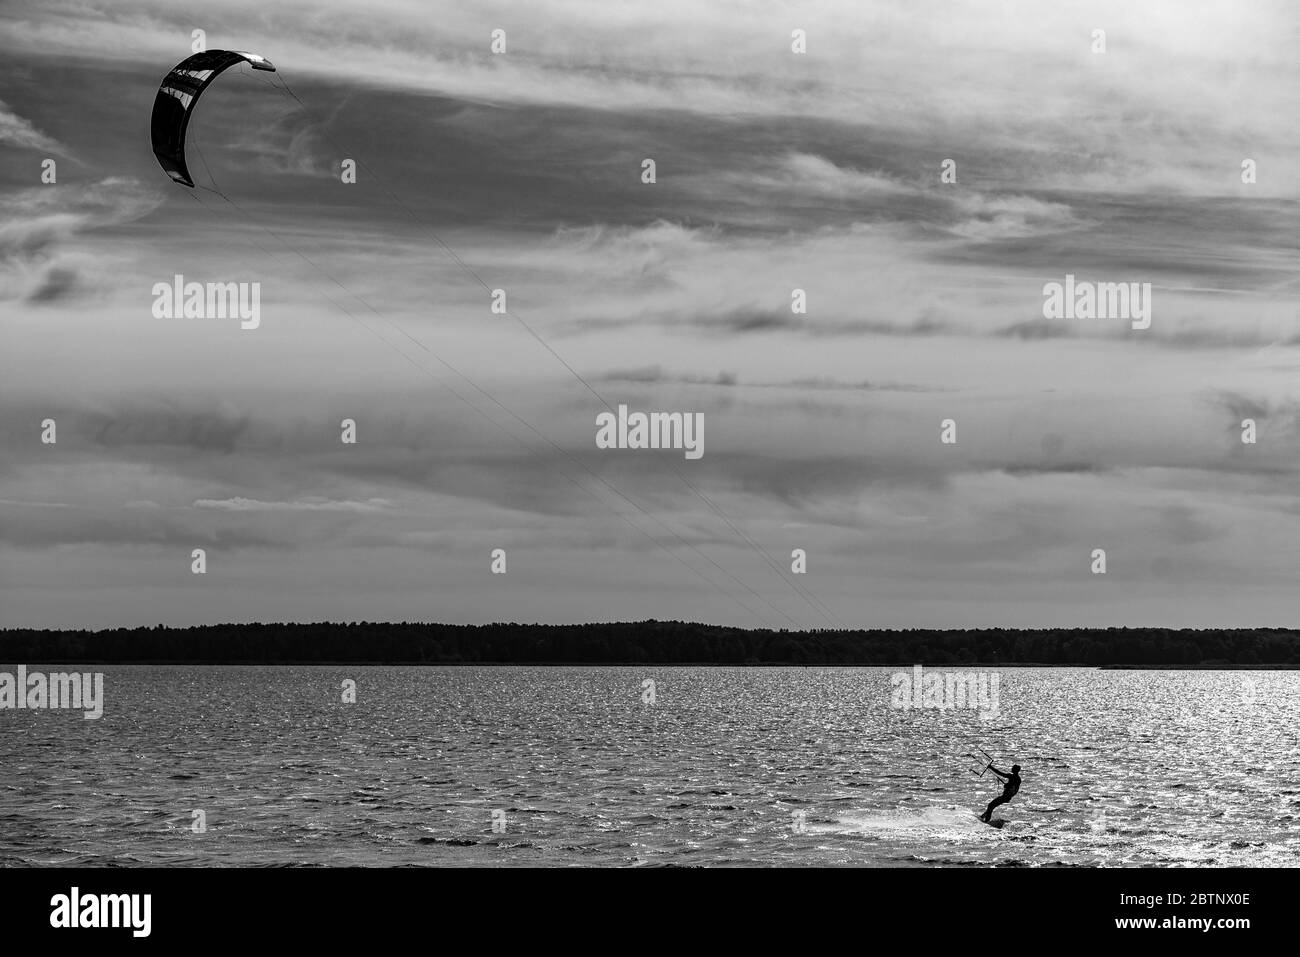 Atleti di kitesurf sul lago, foto in bianco e nero. Foto Stock